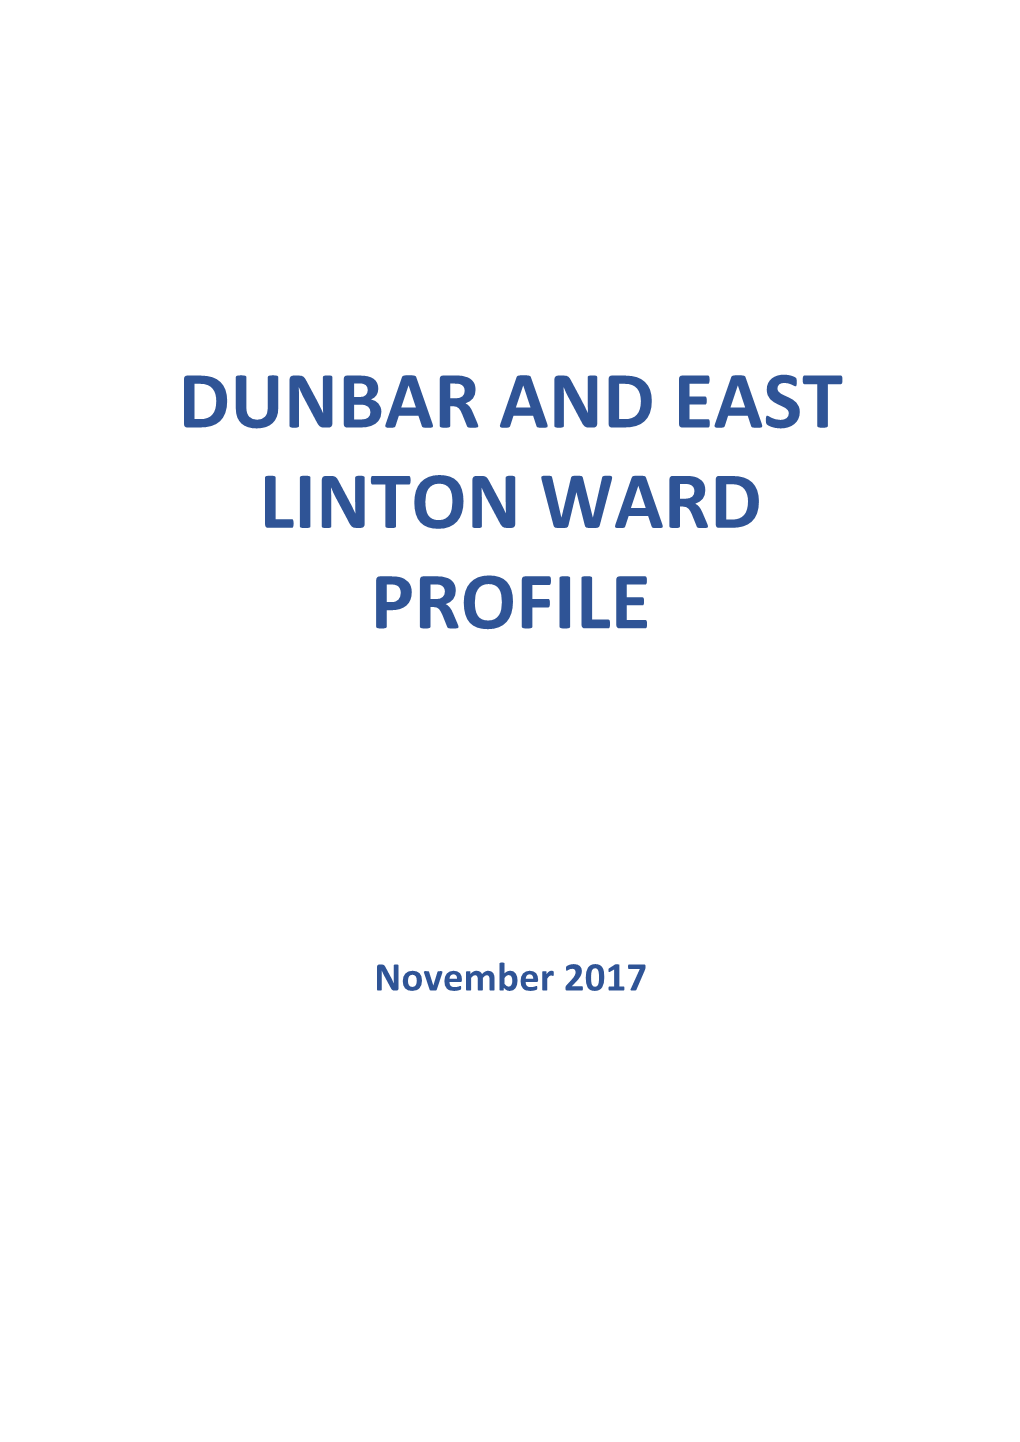 Dunbar and East Linton Ward Profile